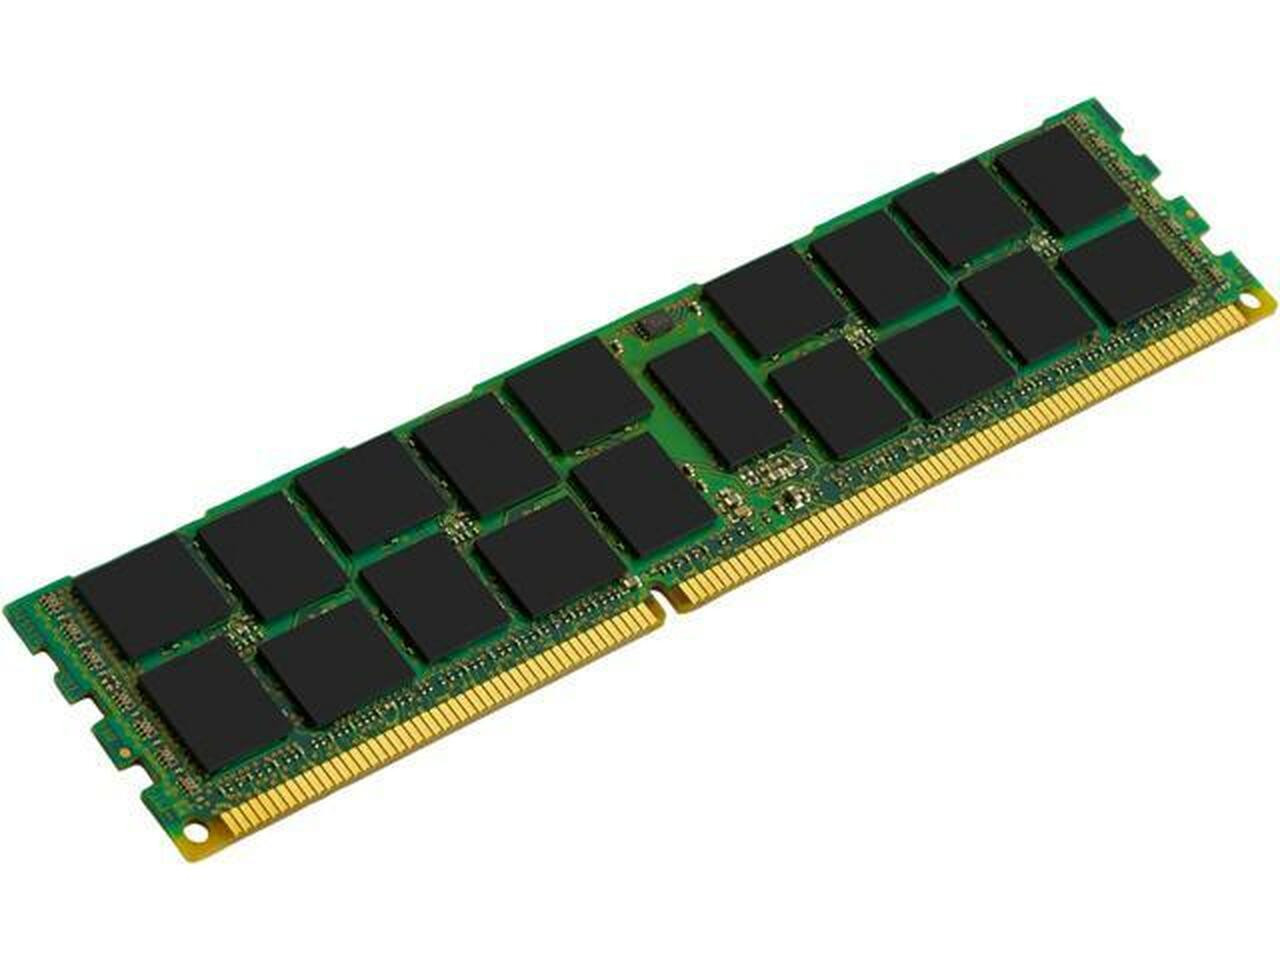 Netpatibles 8GB DDR3 SDRAM Memory Module - MEMDR380LHL03EU16NPM